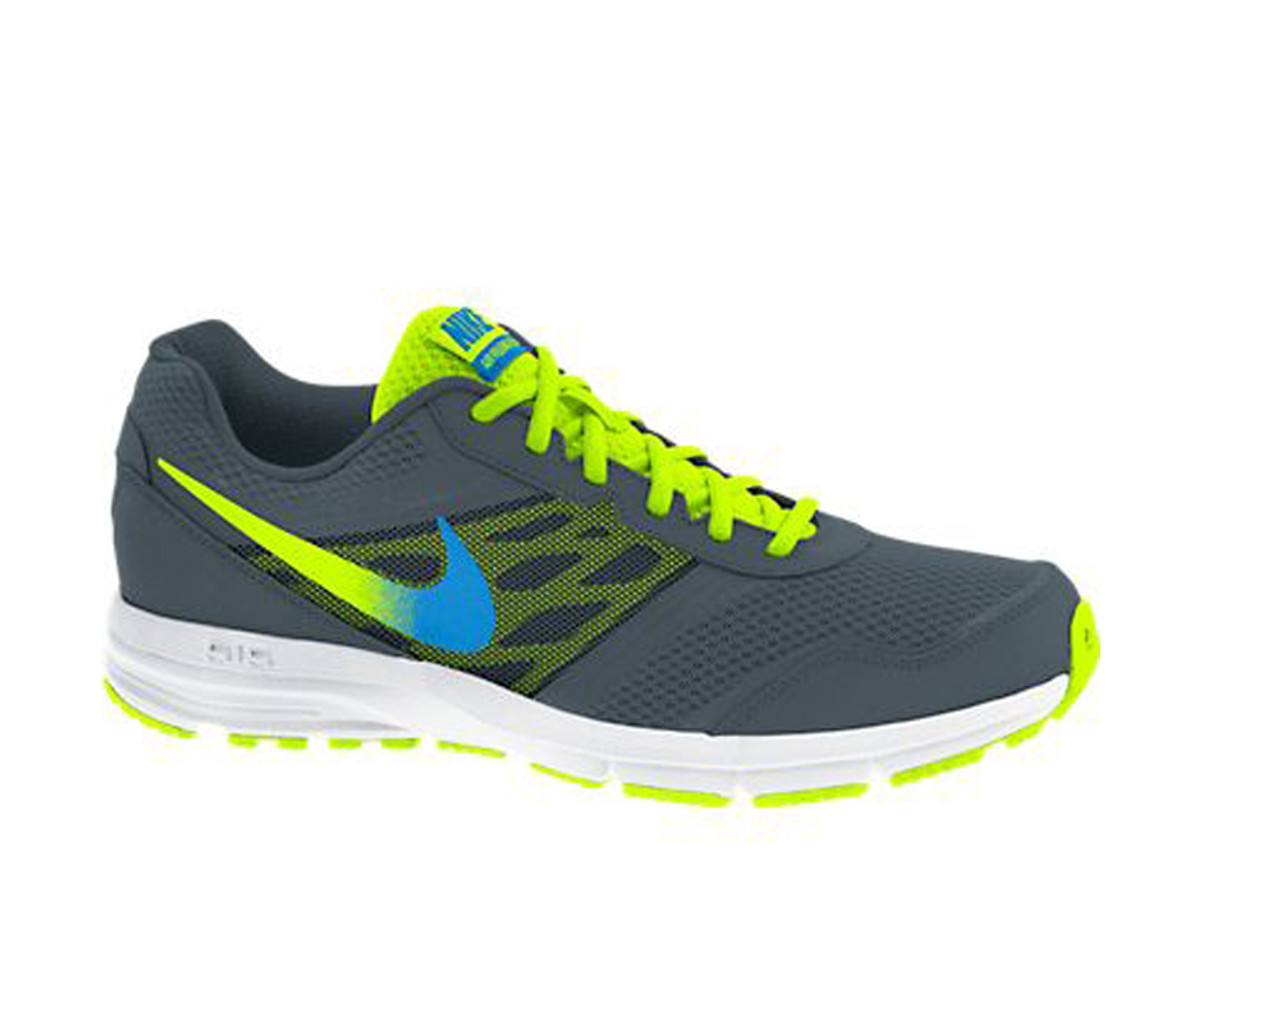 Mezquita Beneficiario consultor Nike Men's Air Relentless 4 Running Shoes - Grey | Discount Nike Men's  Athletic & More - Shoolu.com | Shoolu.com